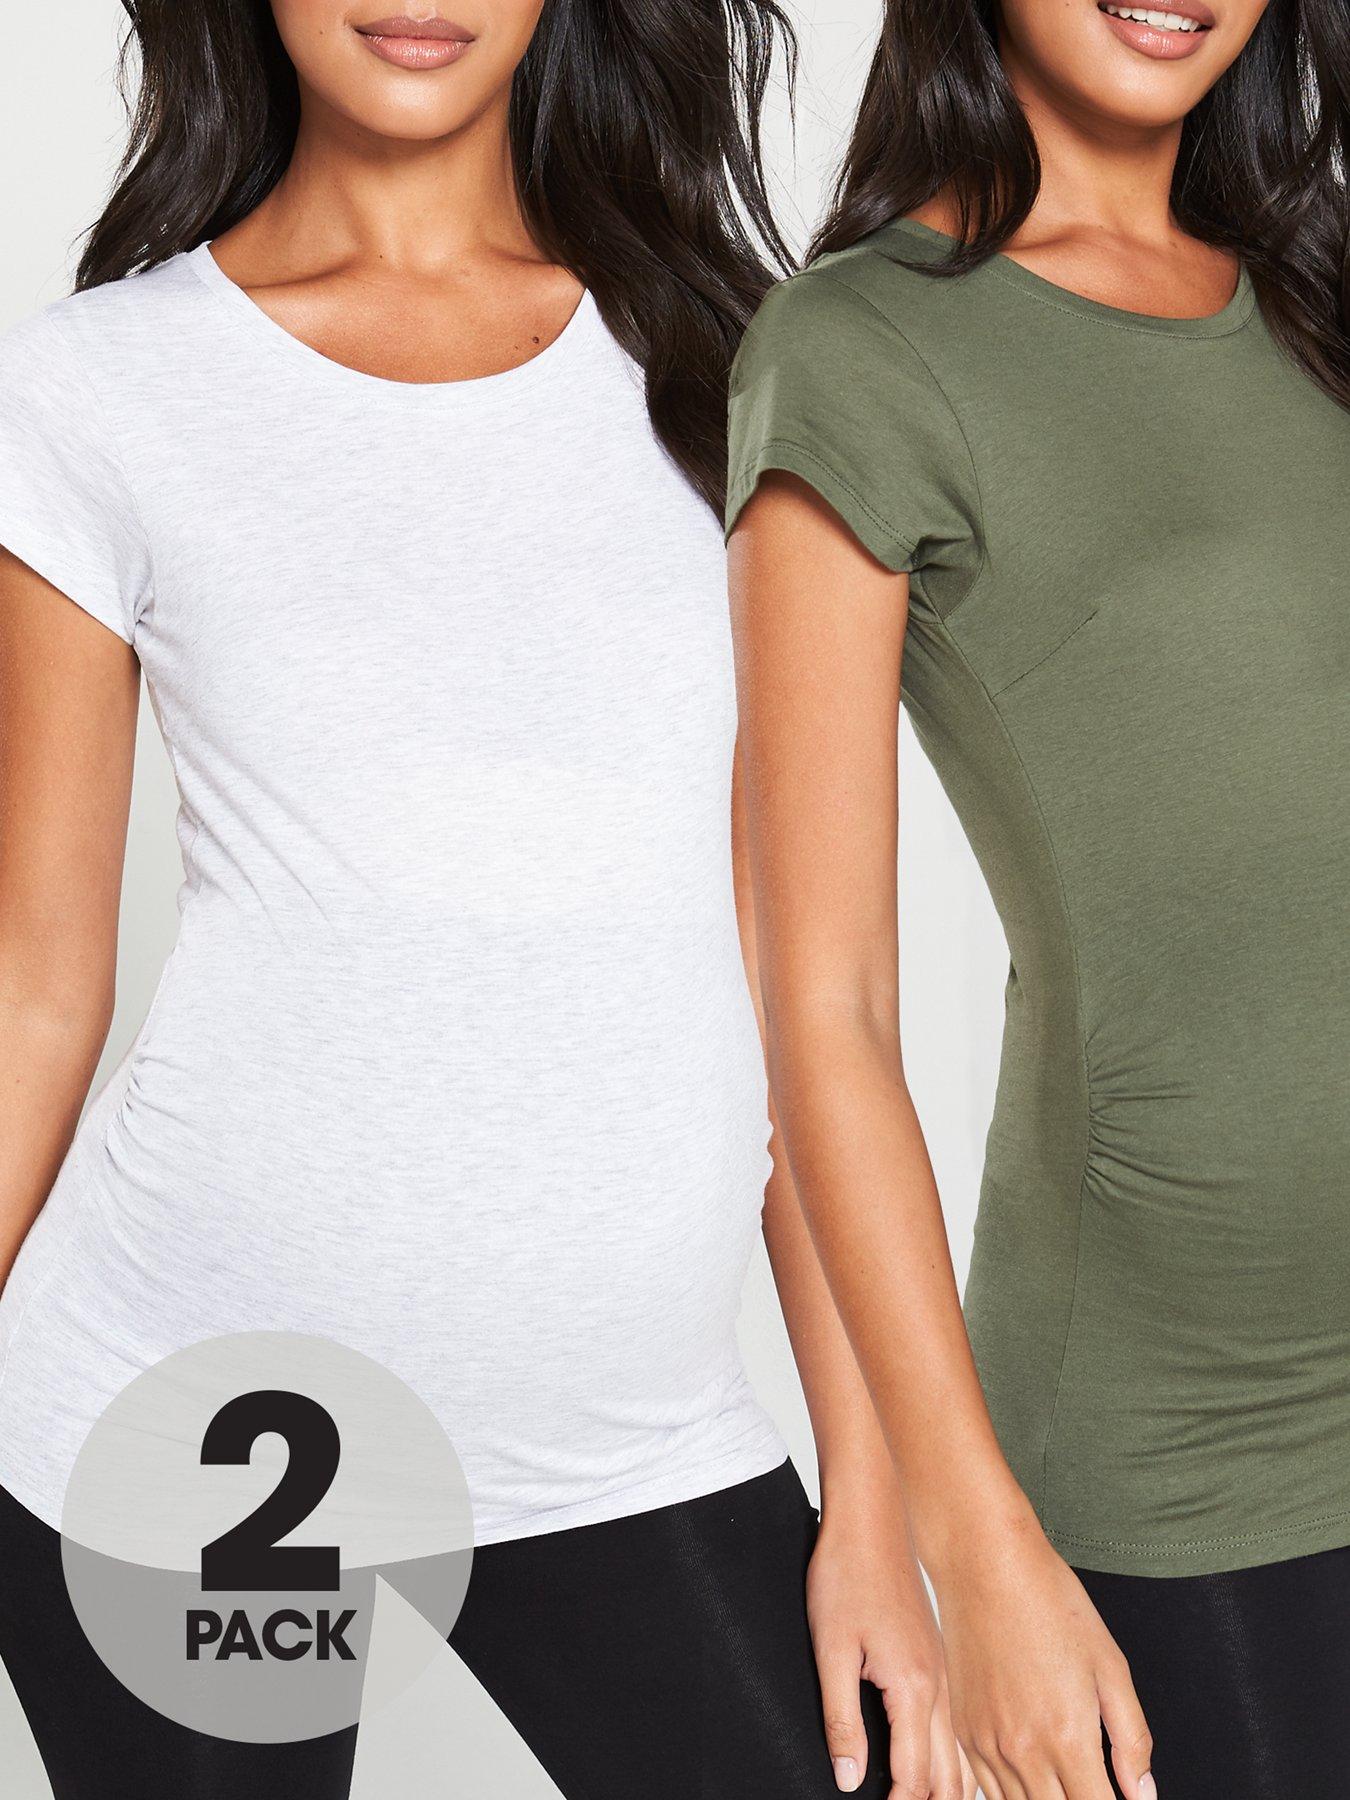 Maternity Clothes \u0026 Pregnancy Clothing 